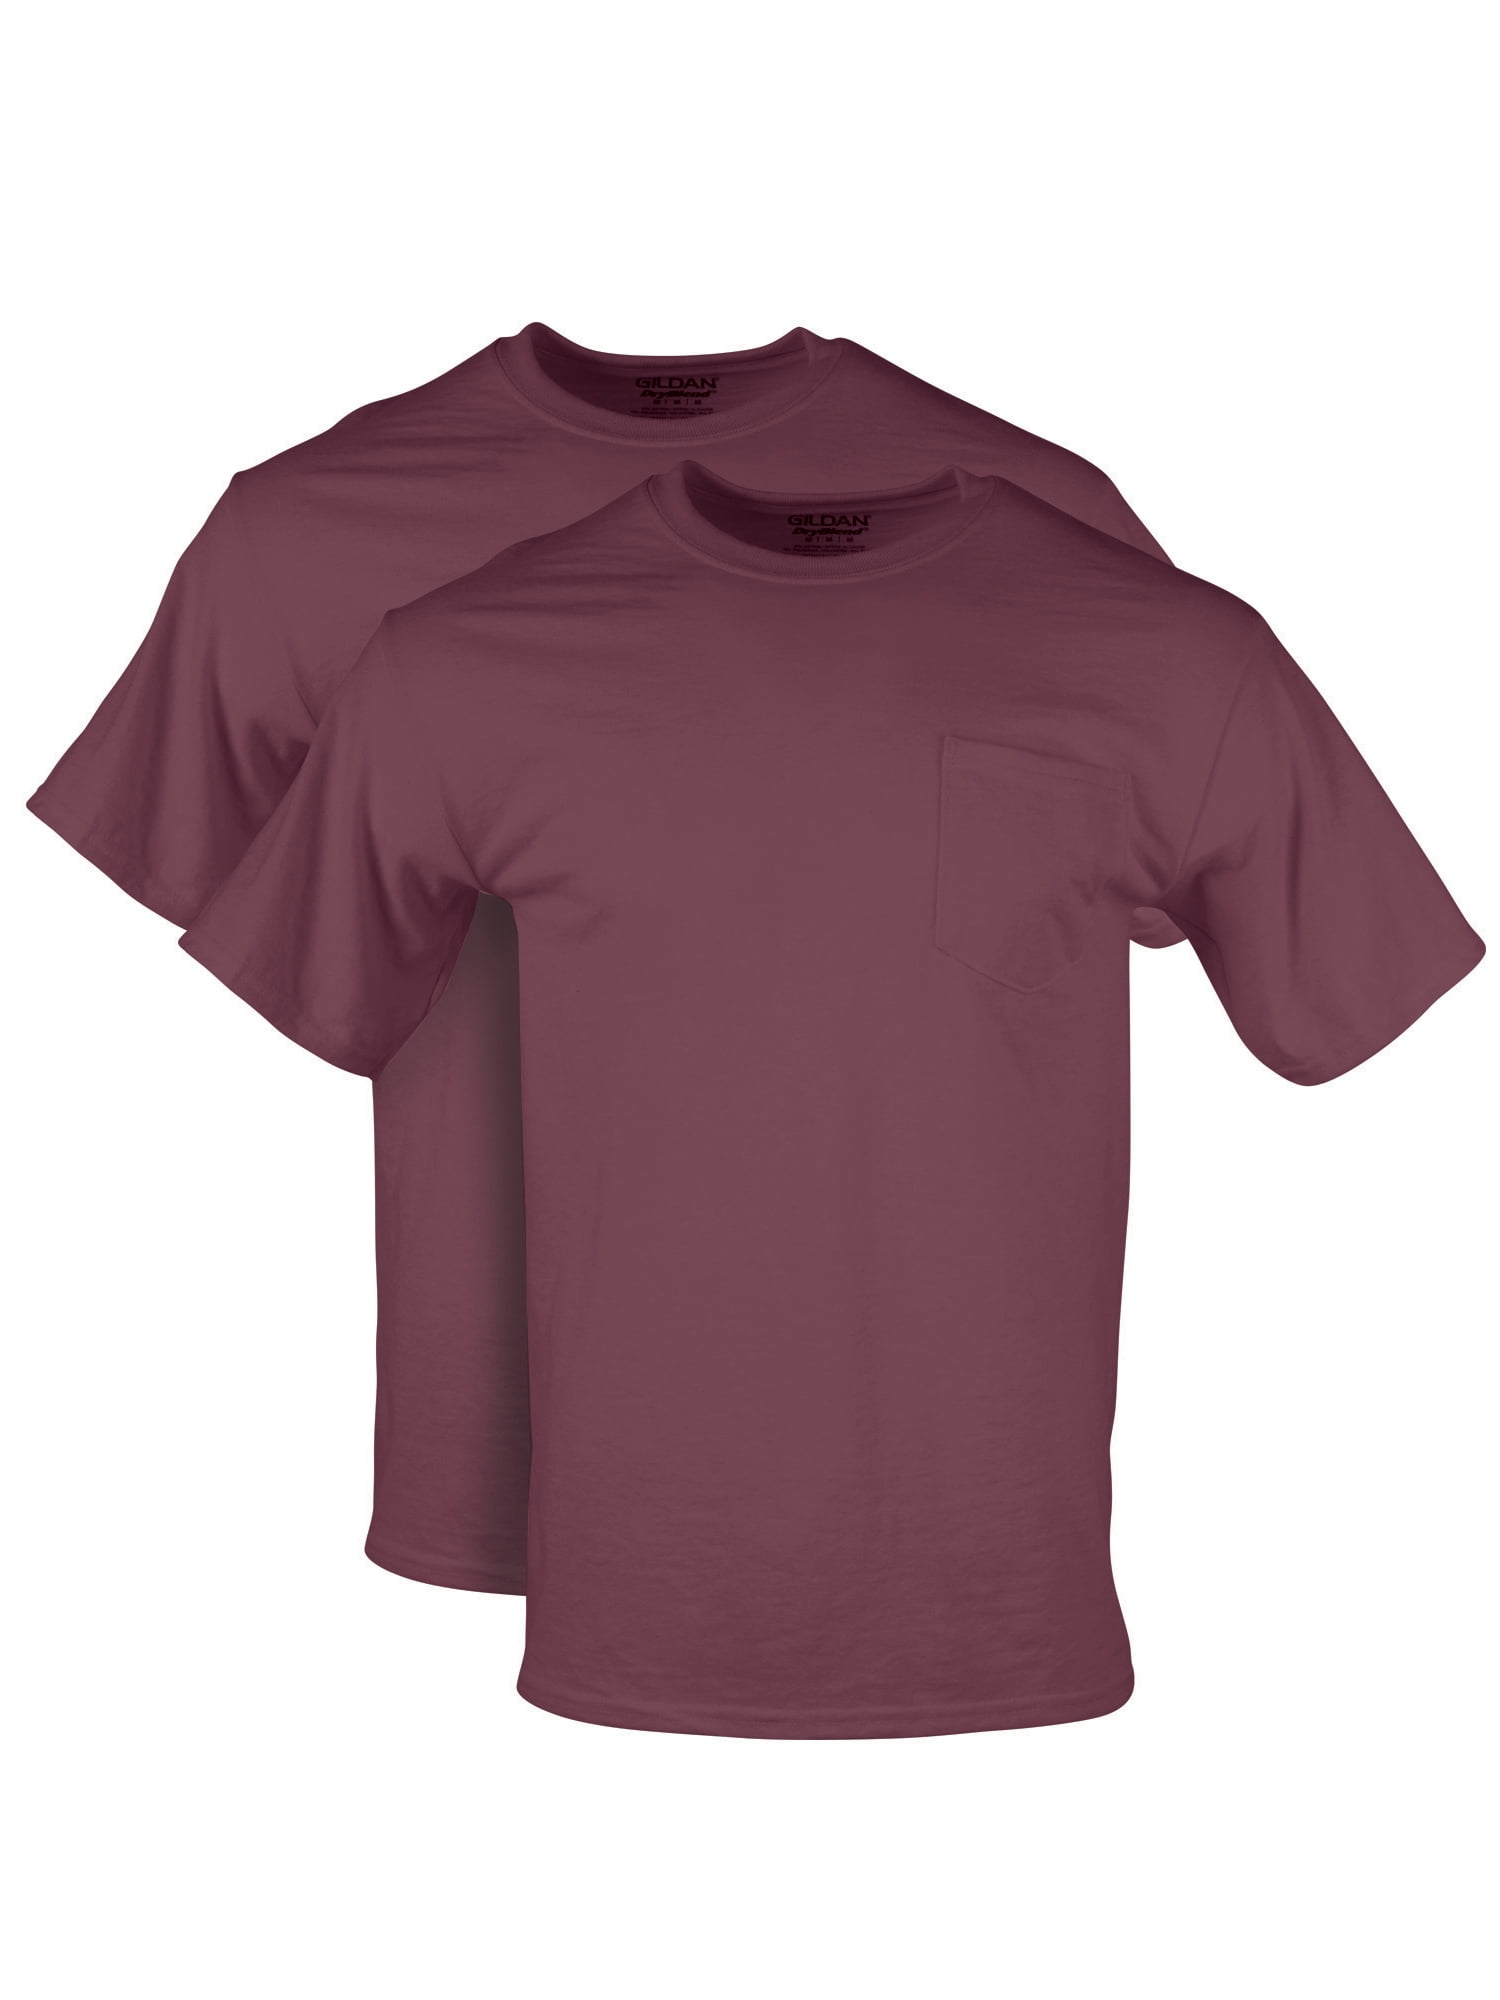  Custom T-Shirt Gildan Tee Mens - Small - Black : Clothing,  Shoes & Jewelry